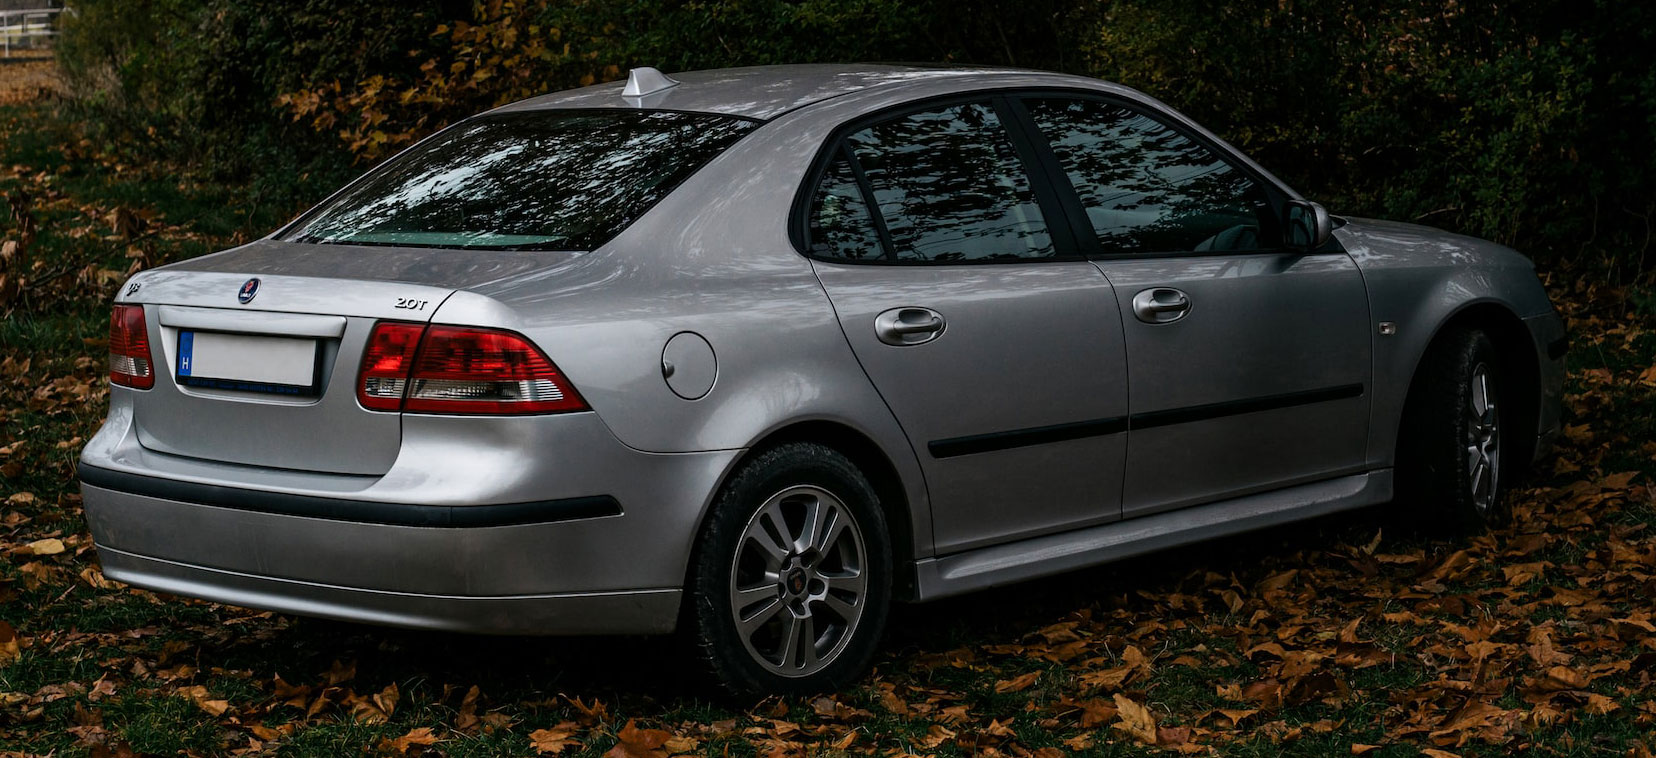 Saab car under trees in autumn setting